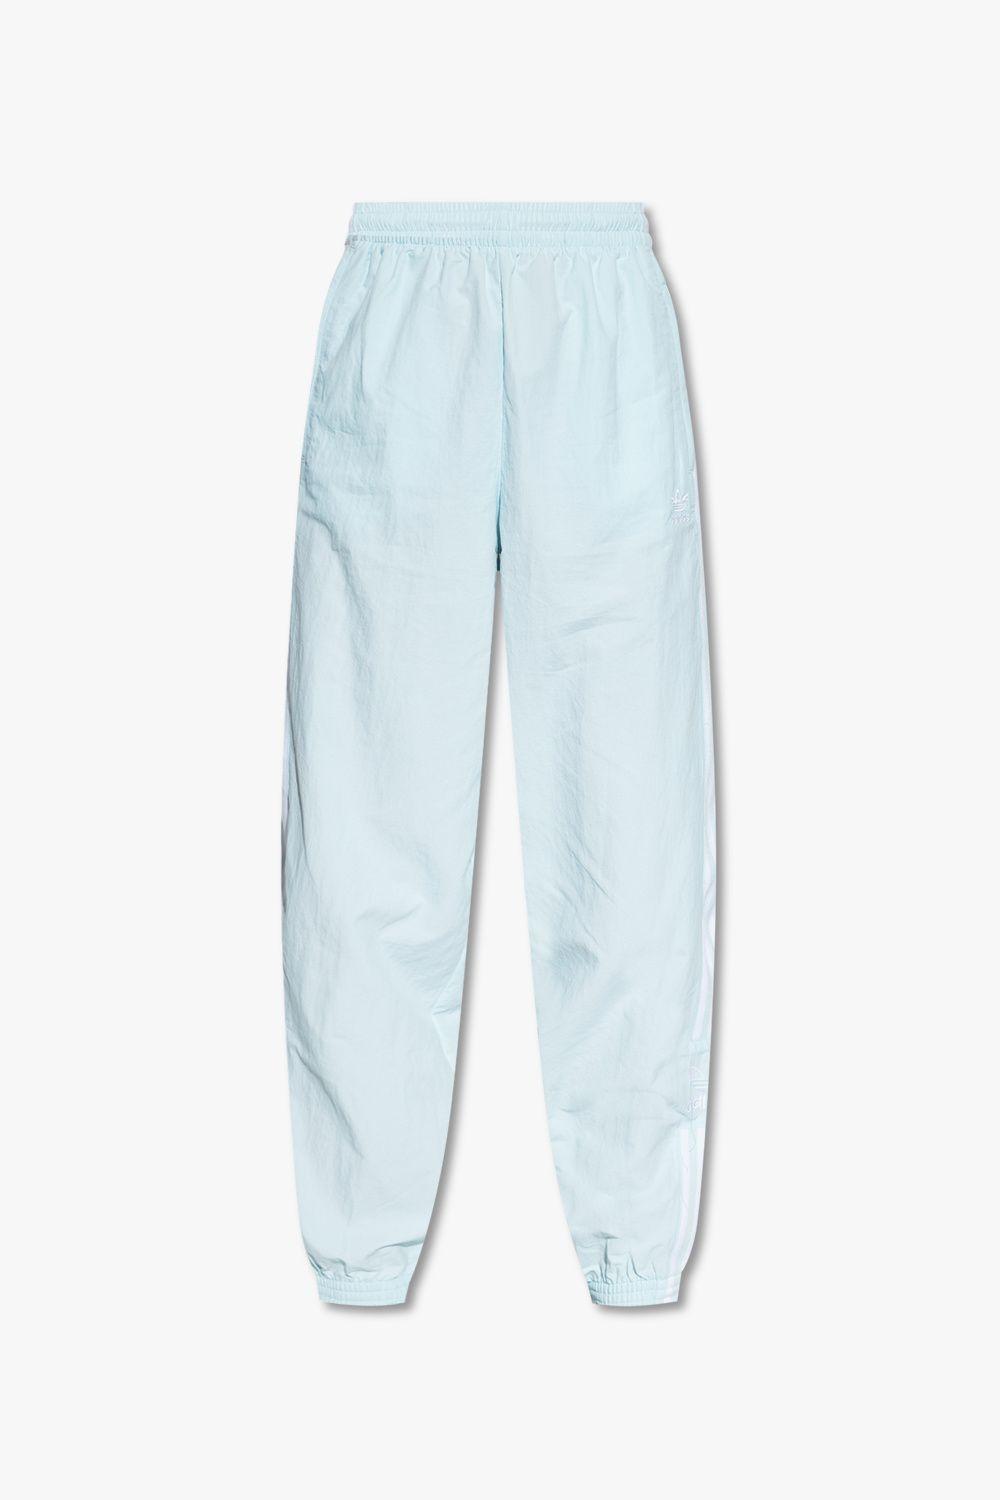 adidas Originals Track Pants in Blue | Lyst